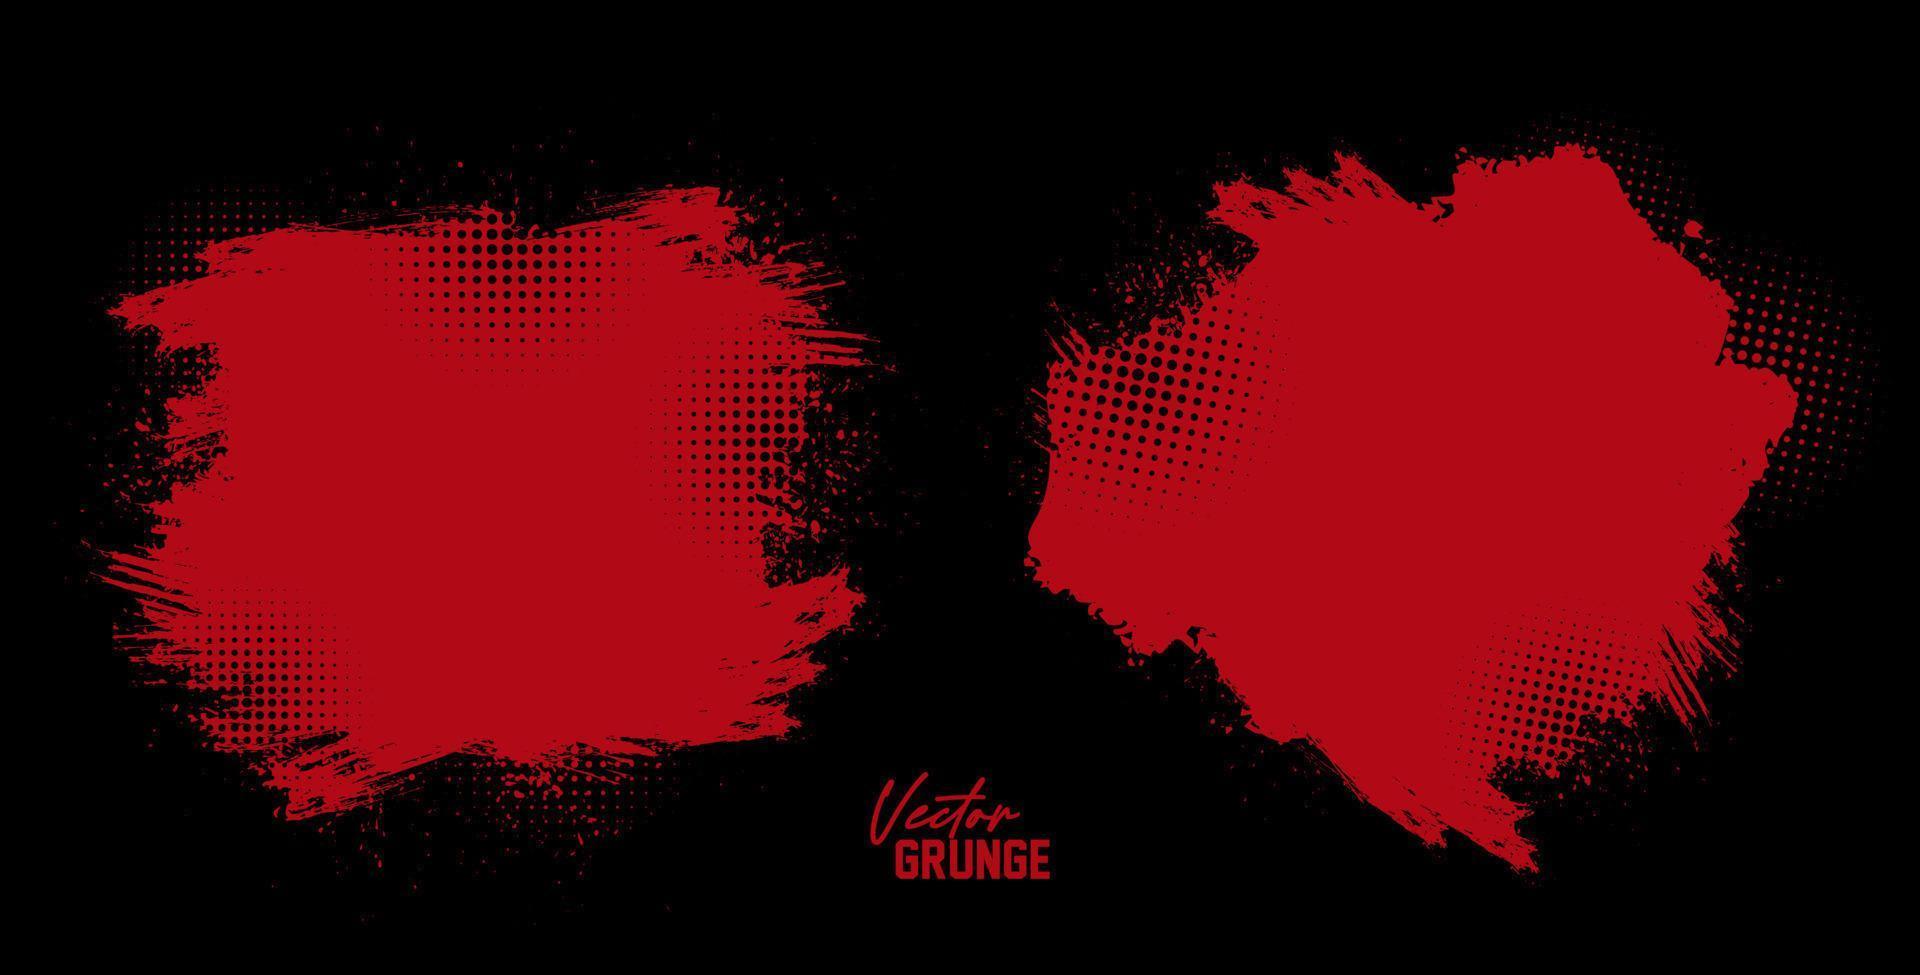 abstract red grunge splat texture background design vector